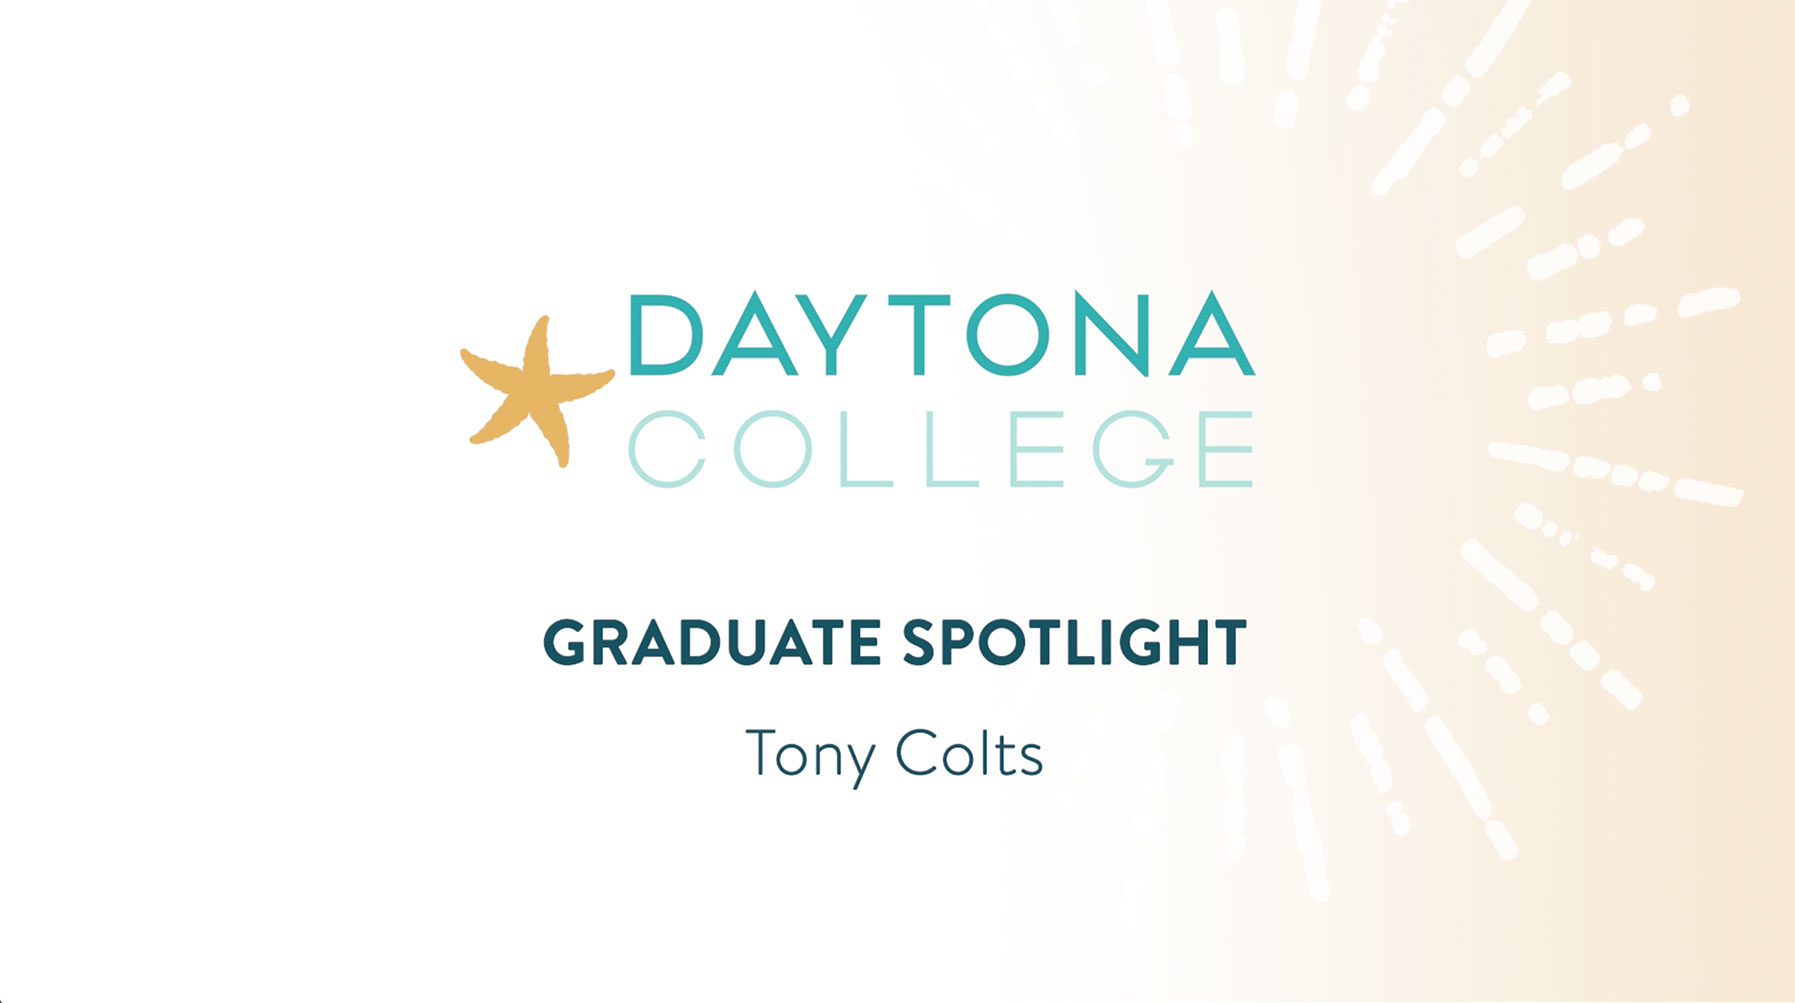 Tony Colts Graduate Spotlight Title